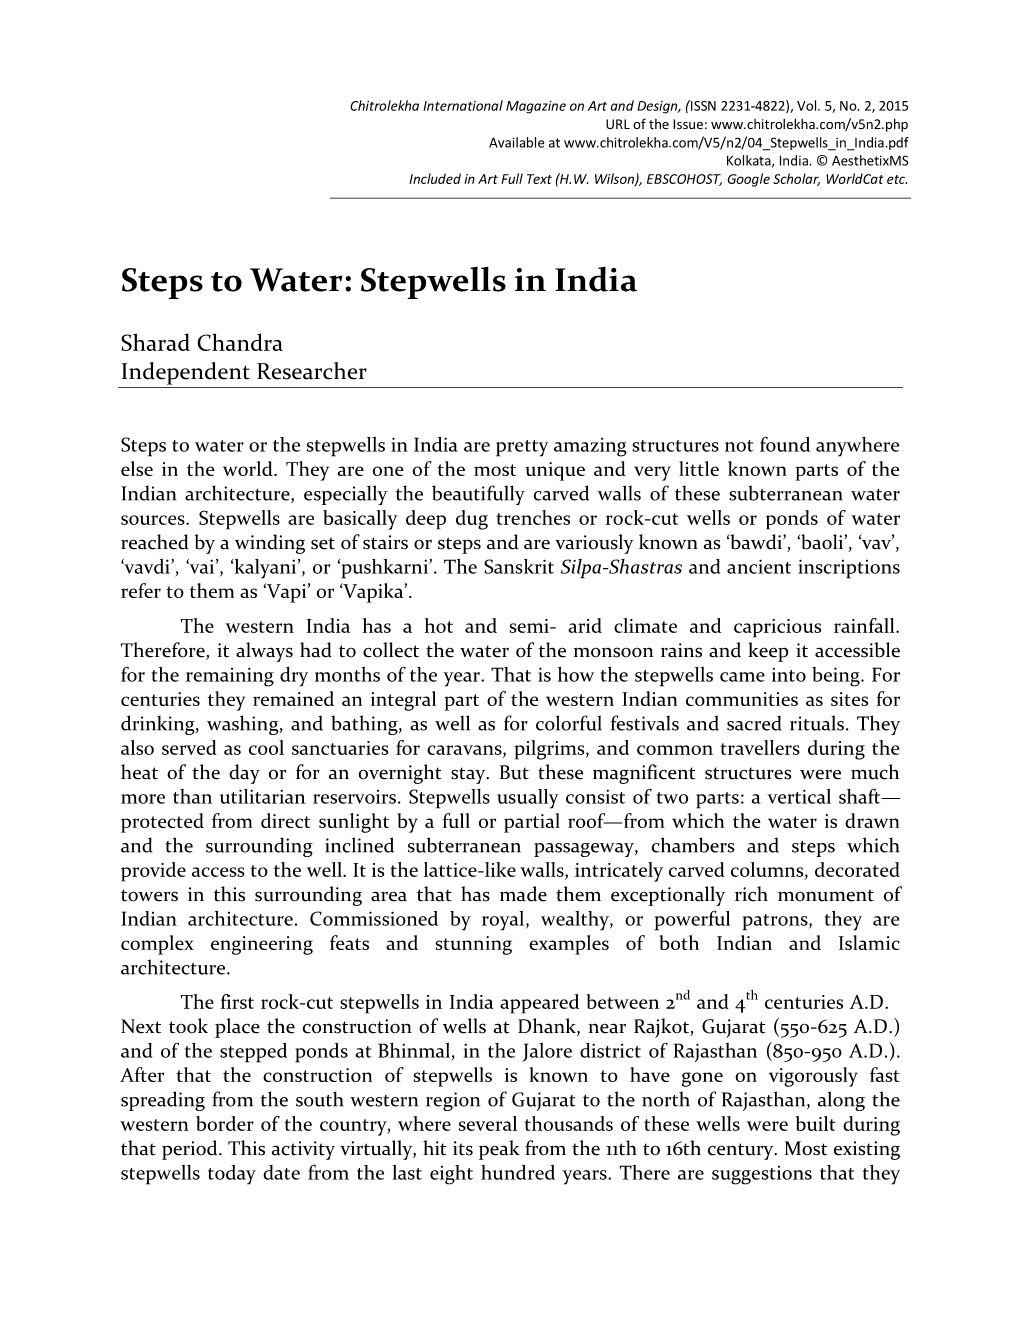 Stepwells in India